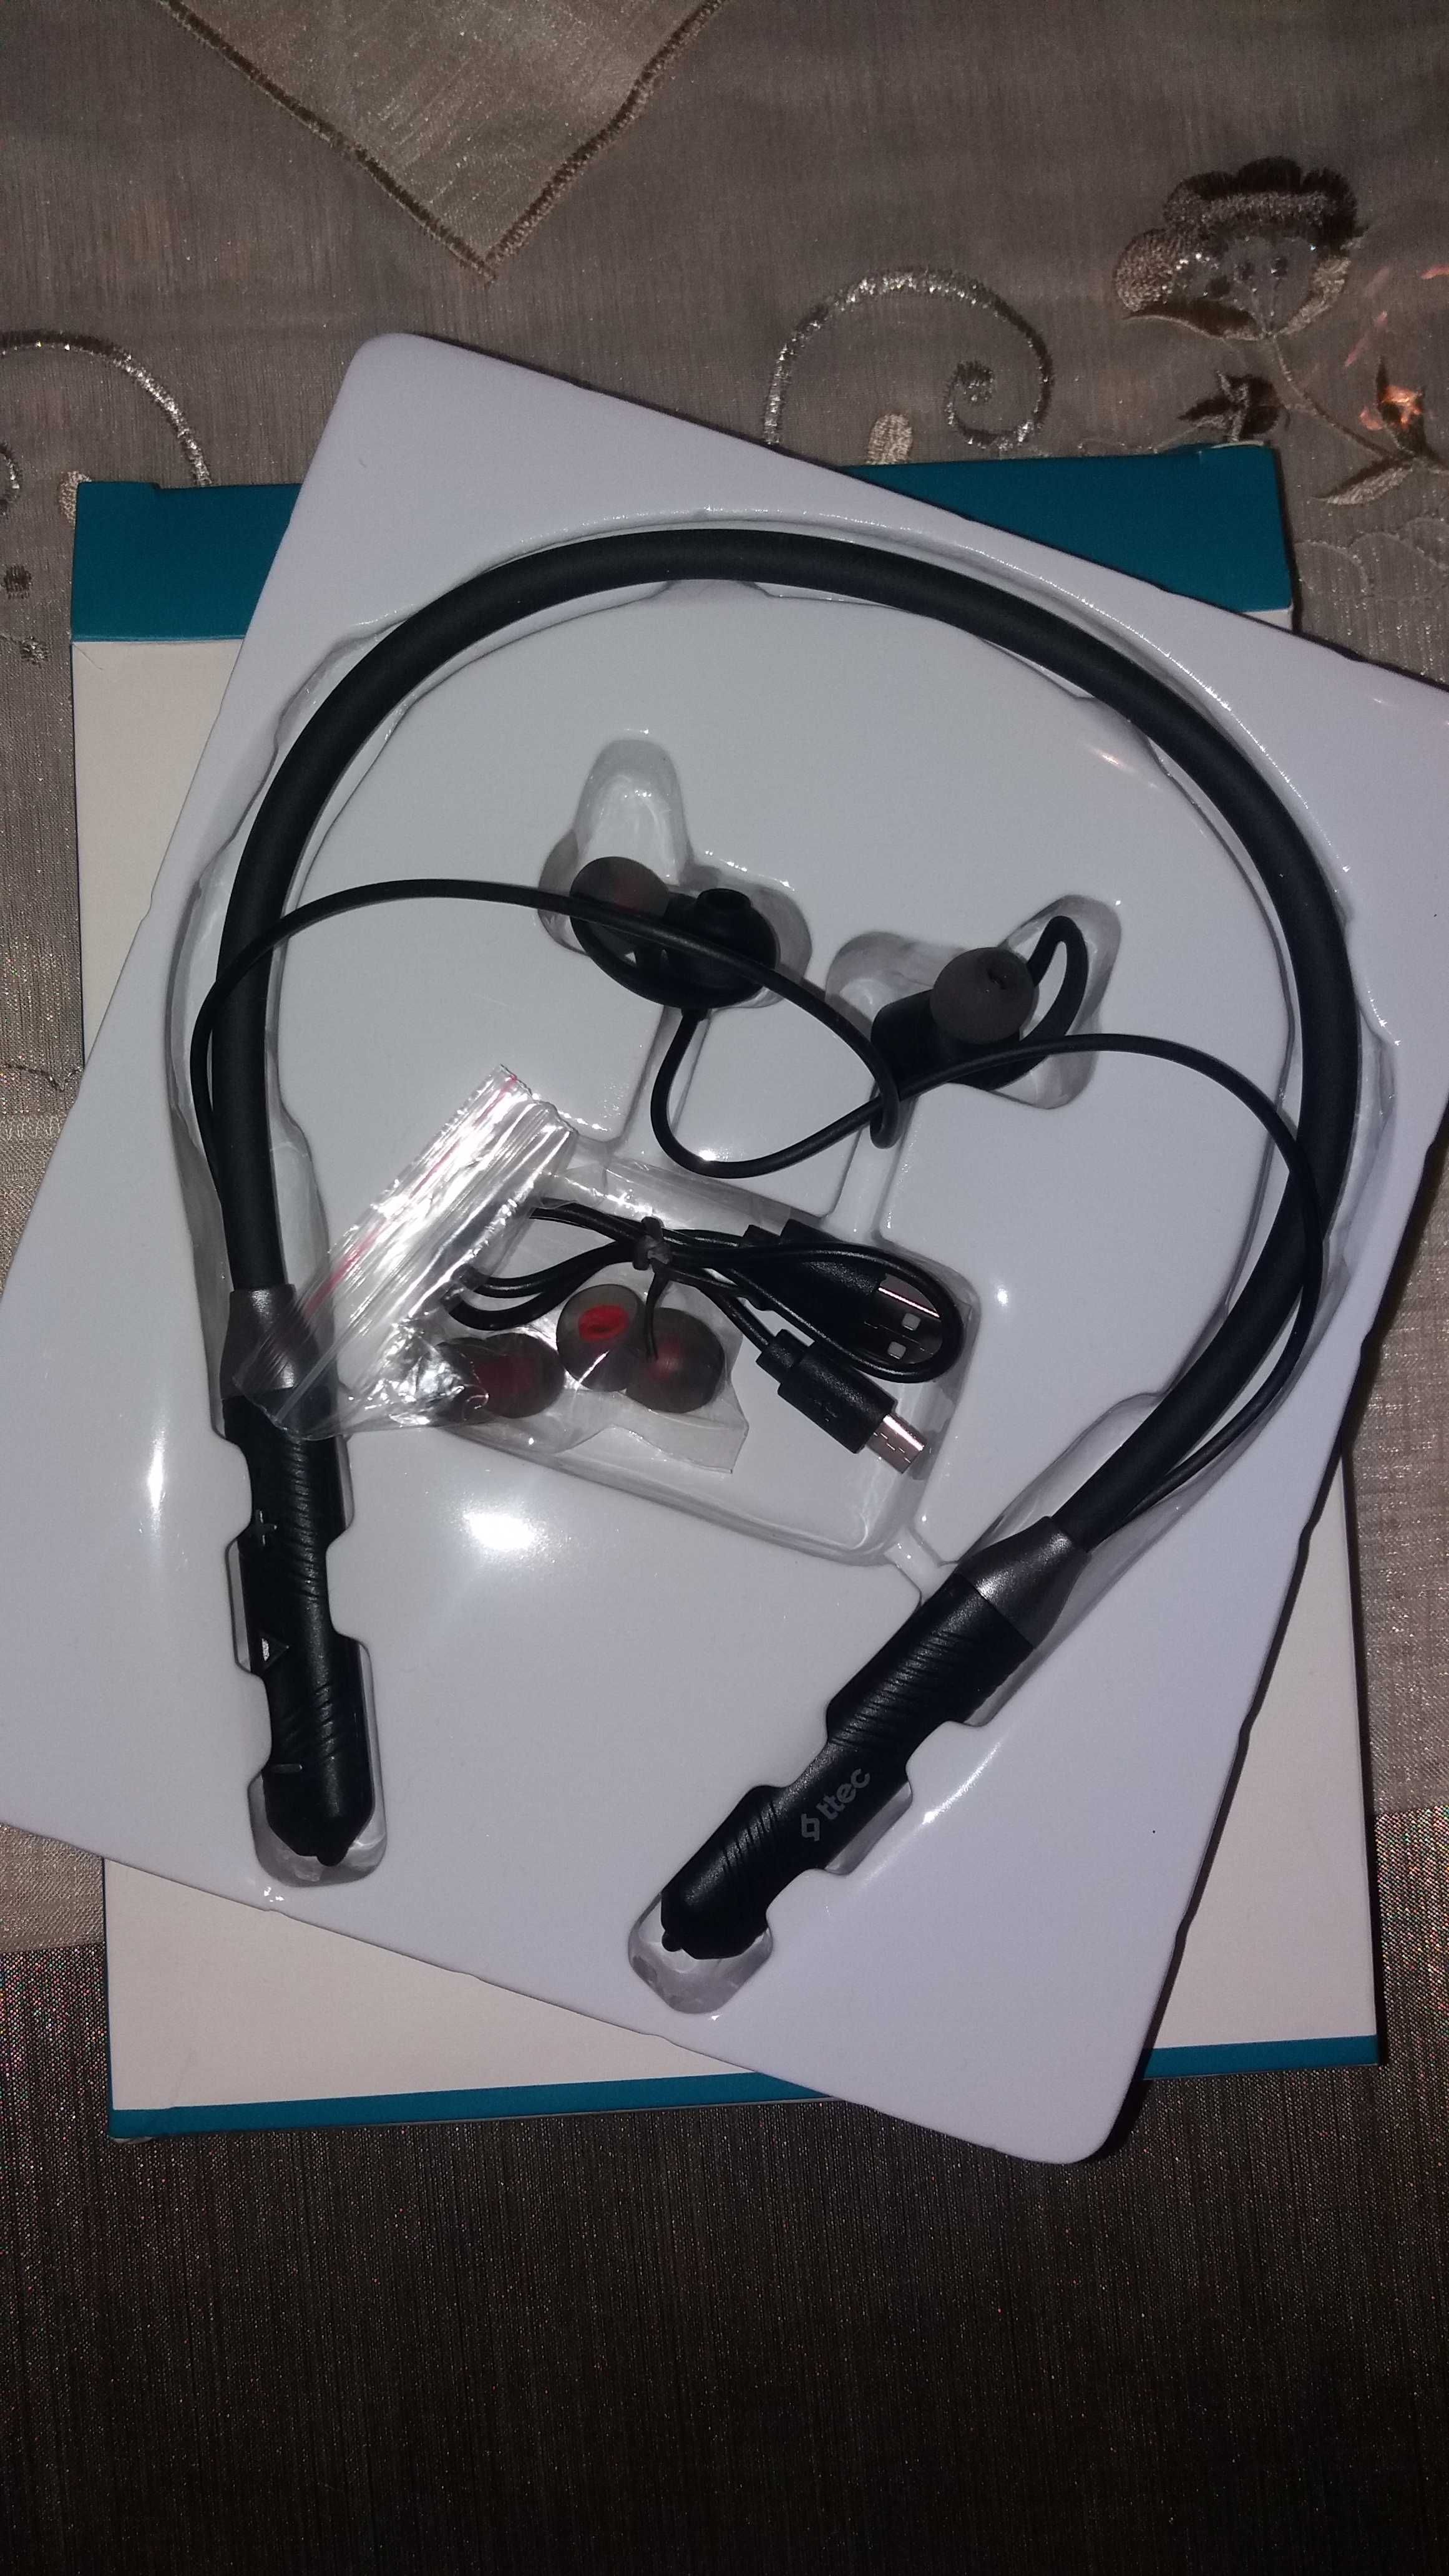 Безжични слушалки Ttec Soundbeat Plus Black